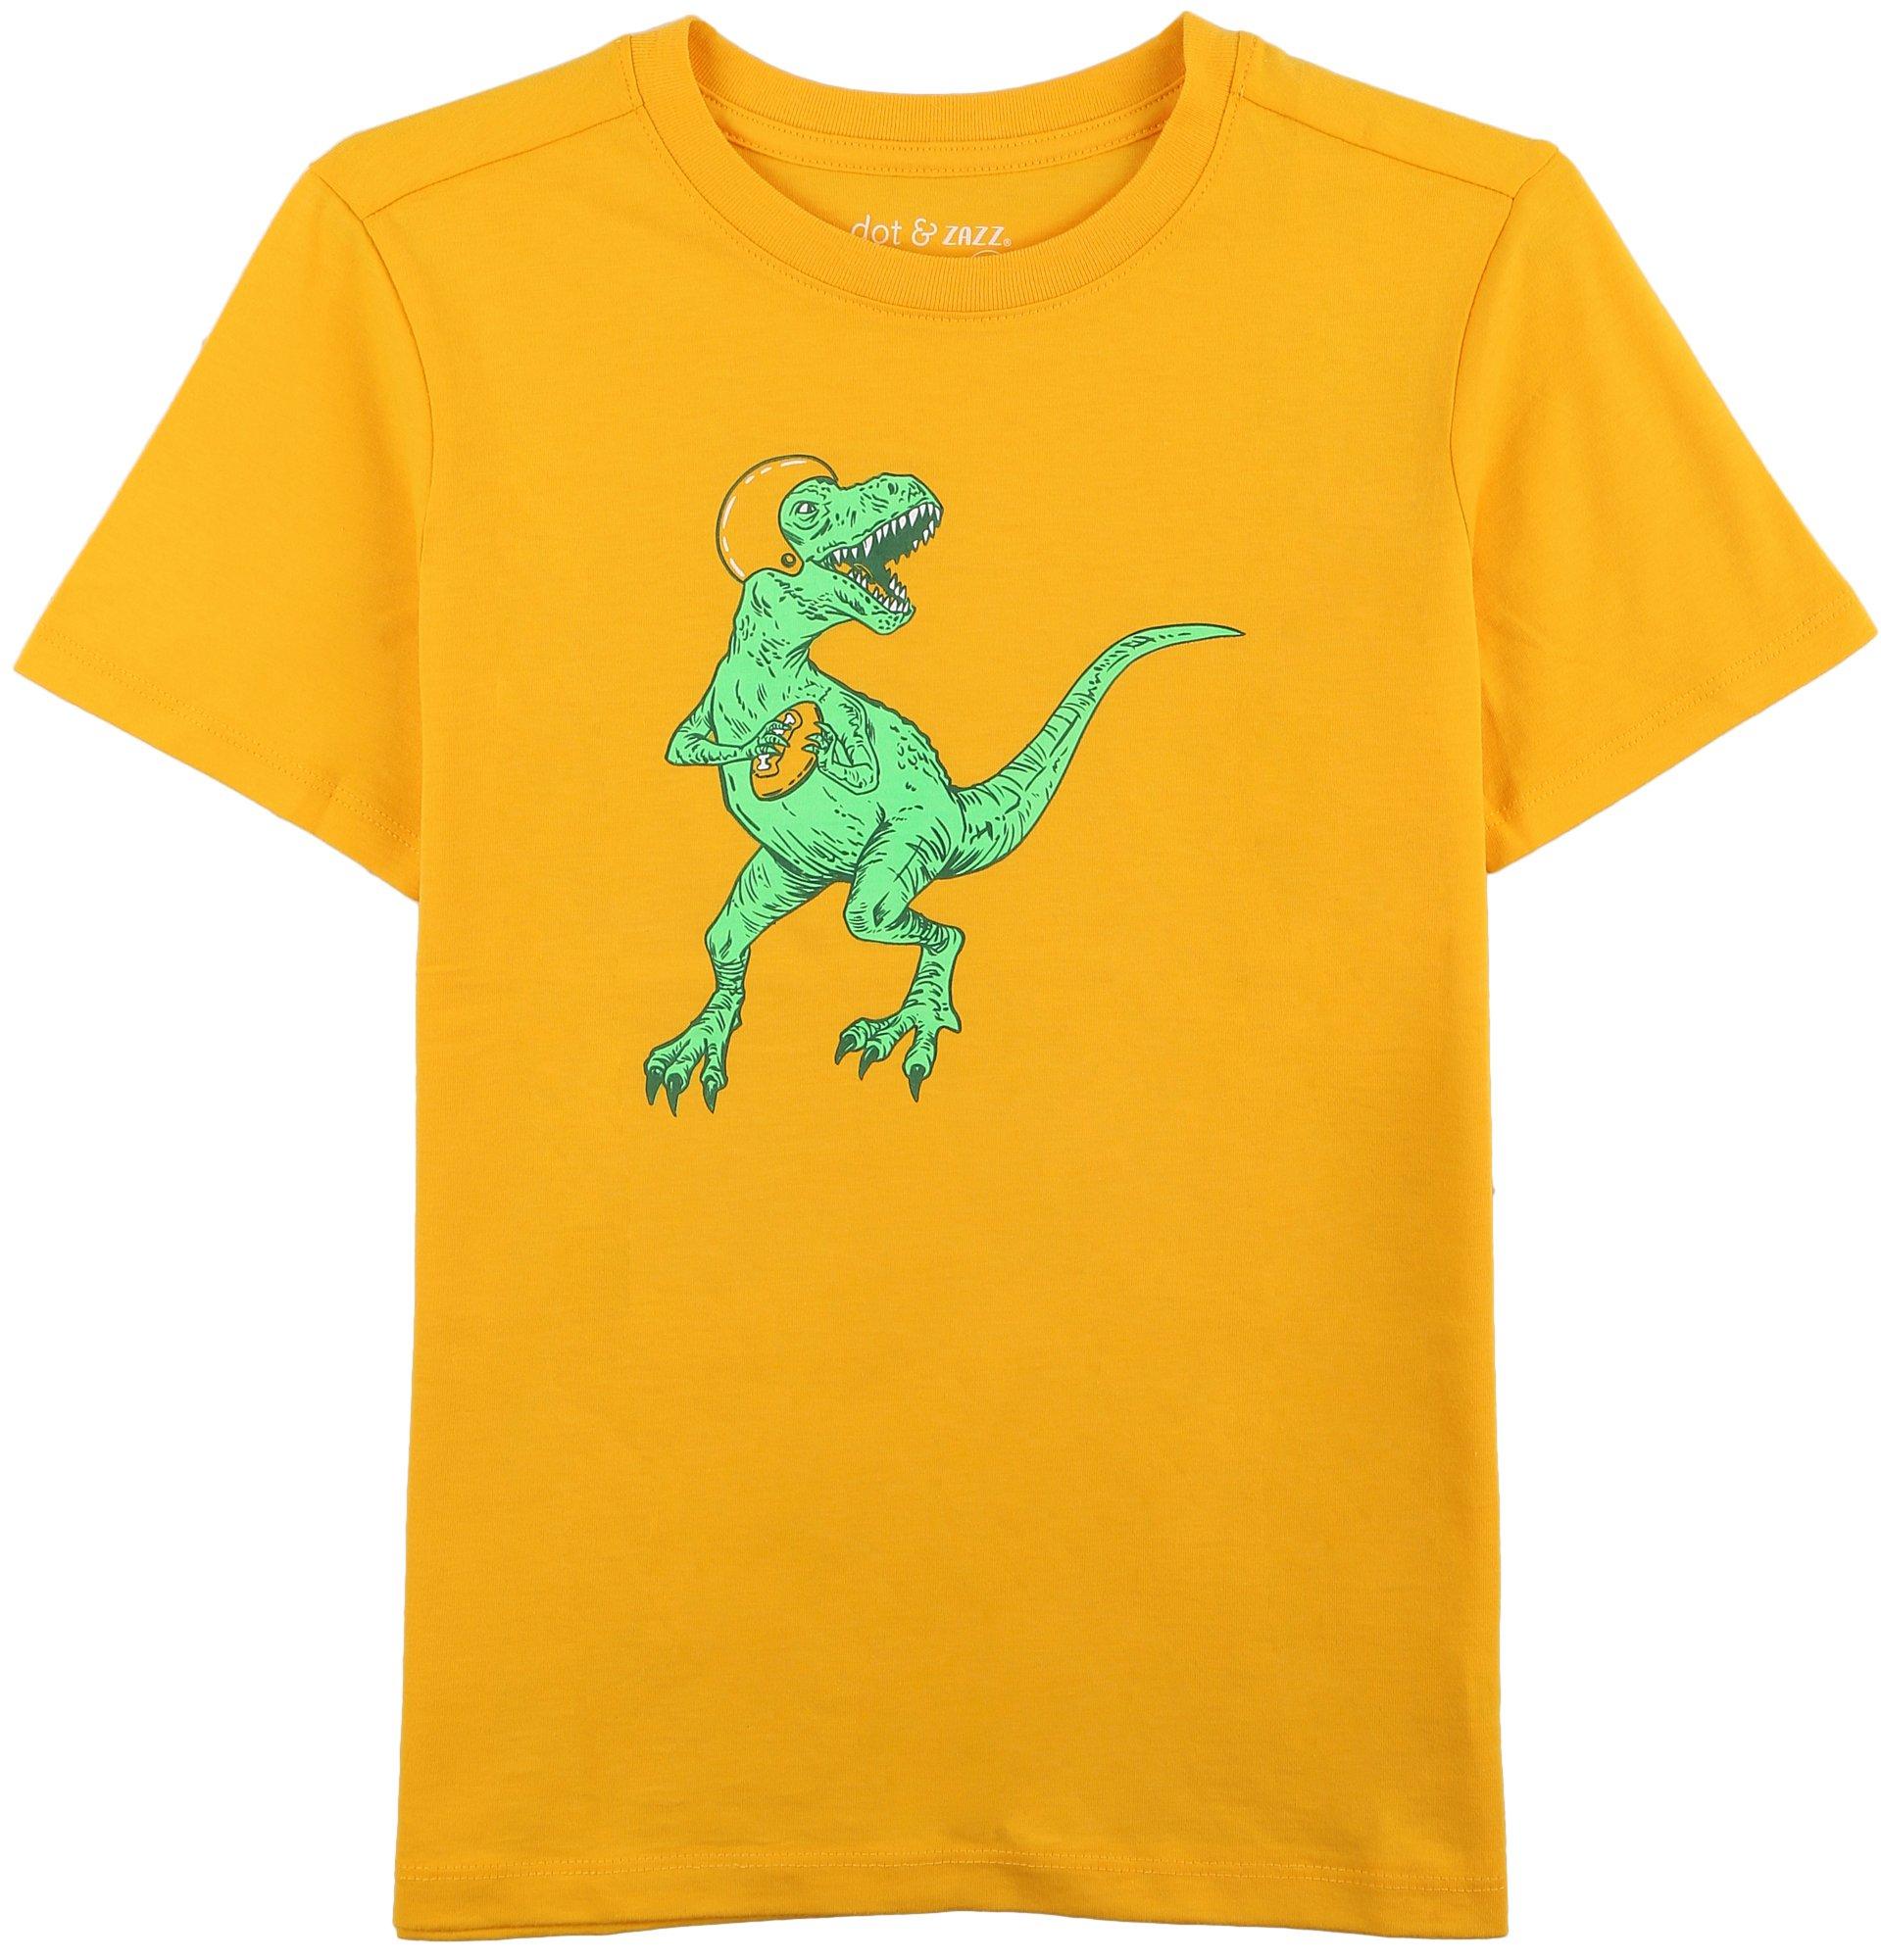 DOT & ZAZZ Big Boys Football Dinosaur Short Sleeve T-Shirt